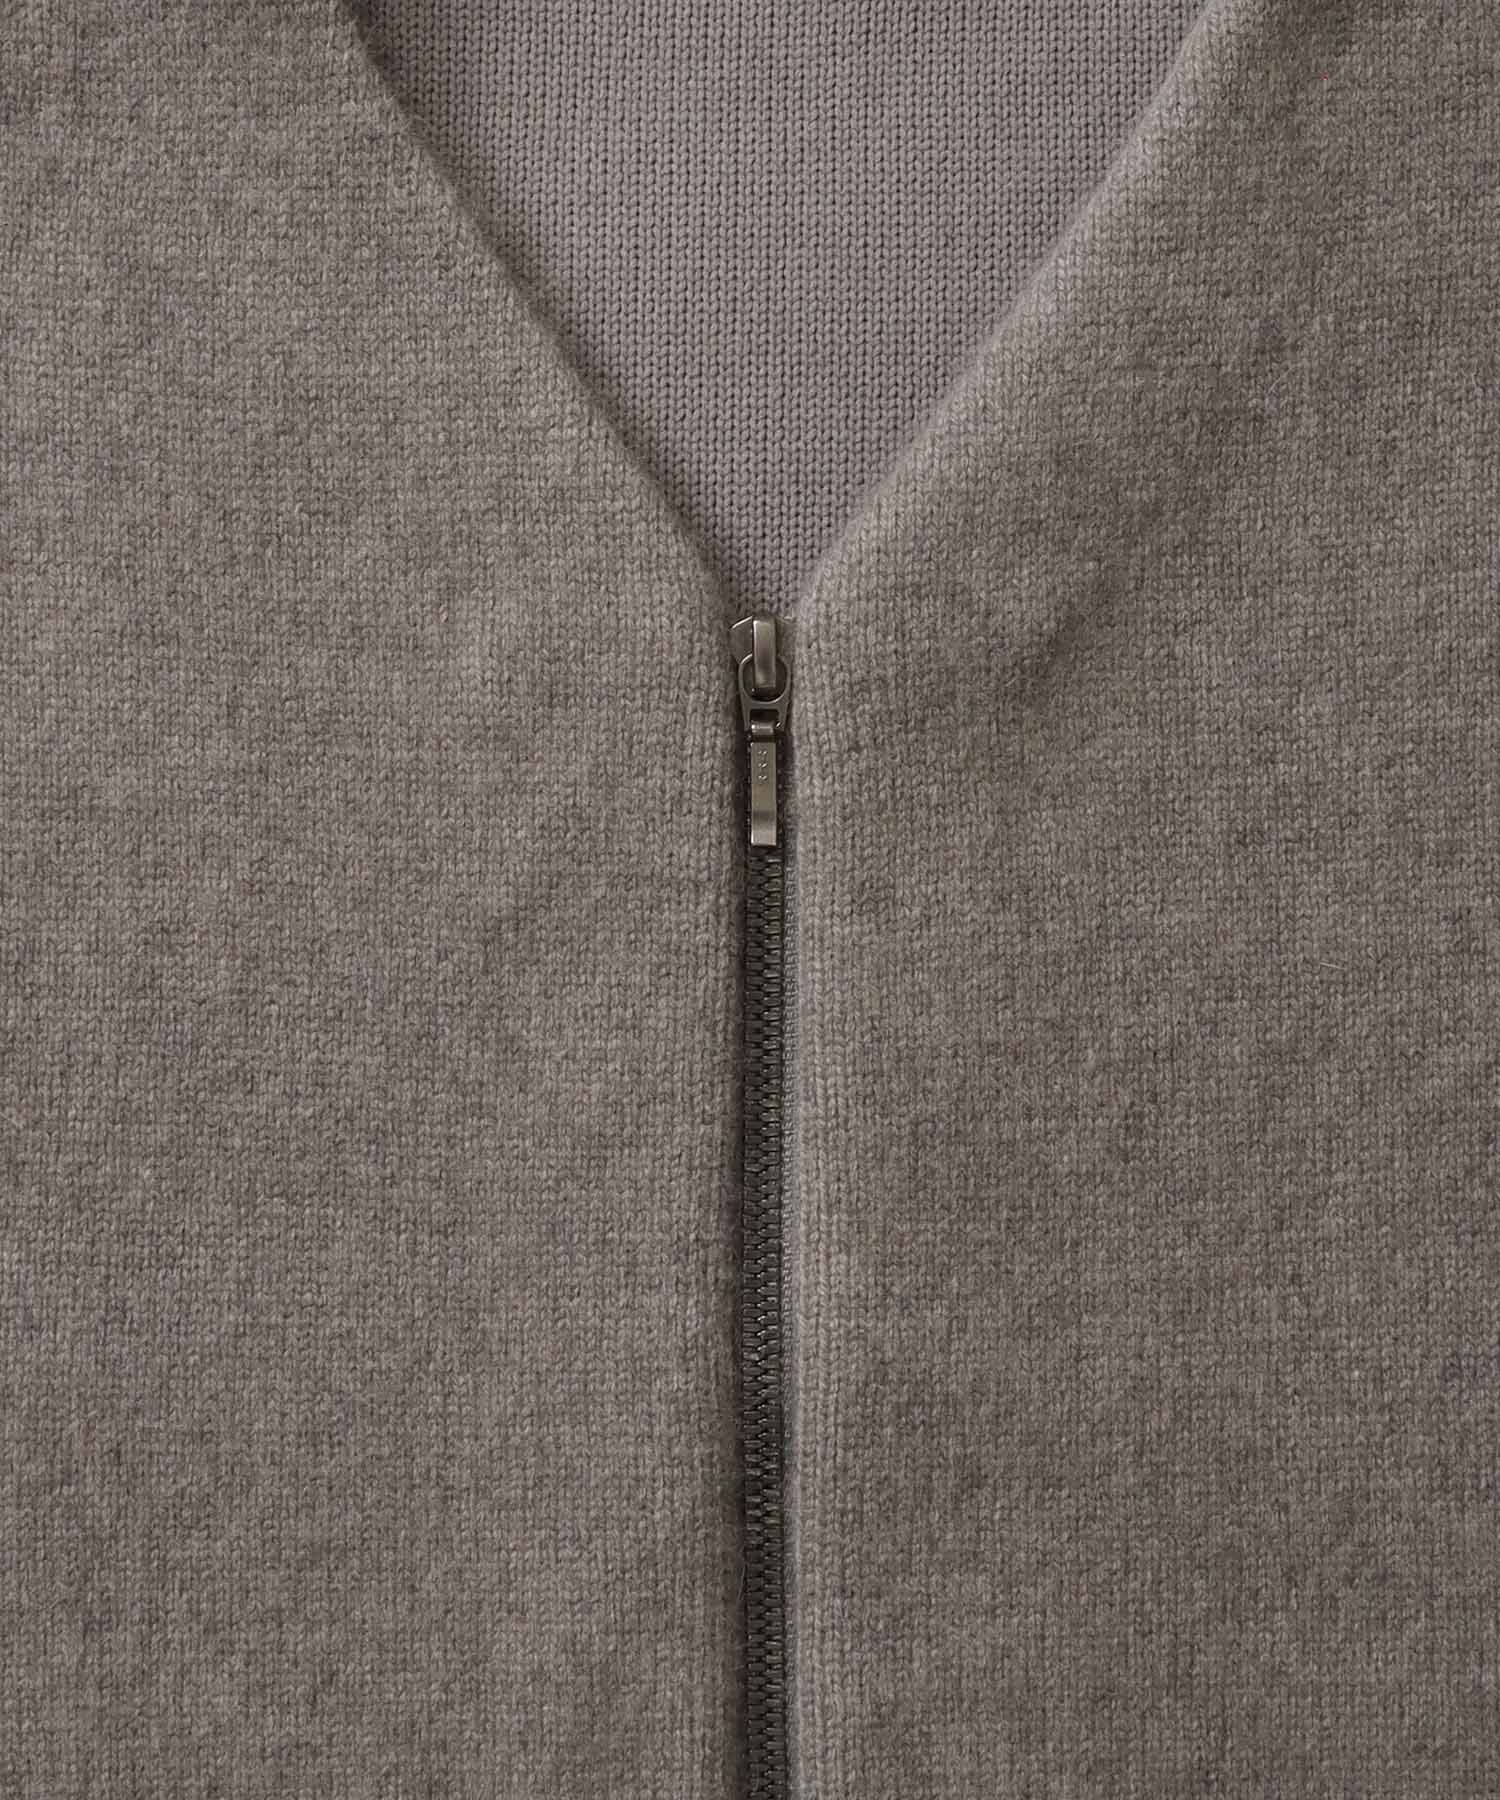 nylon angora doubleface short zip jacket | AND ON JIONE STORE